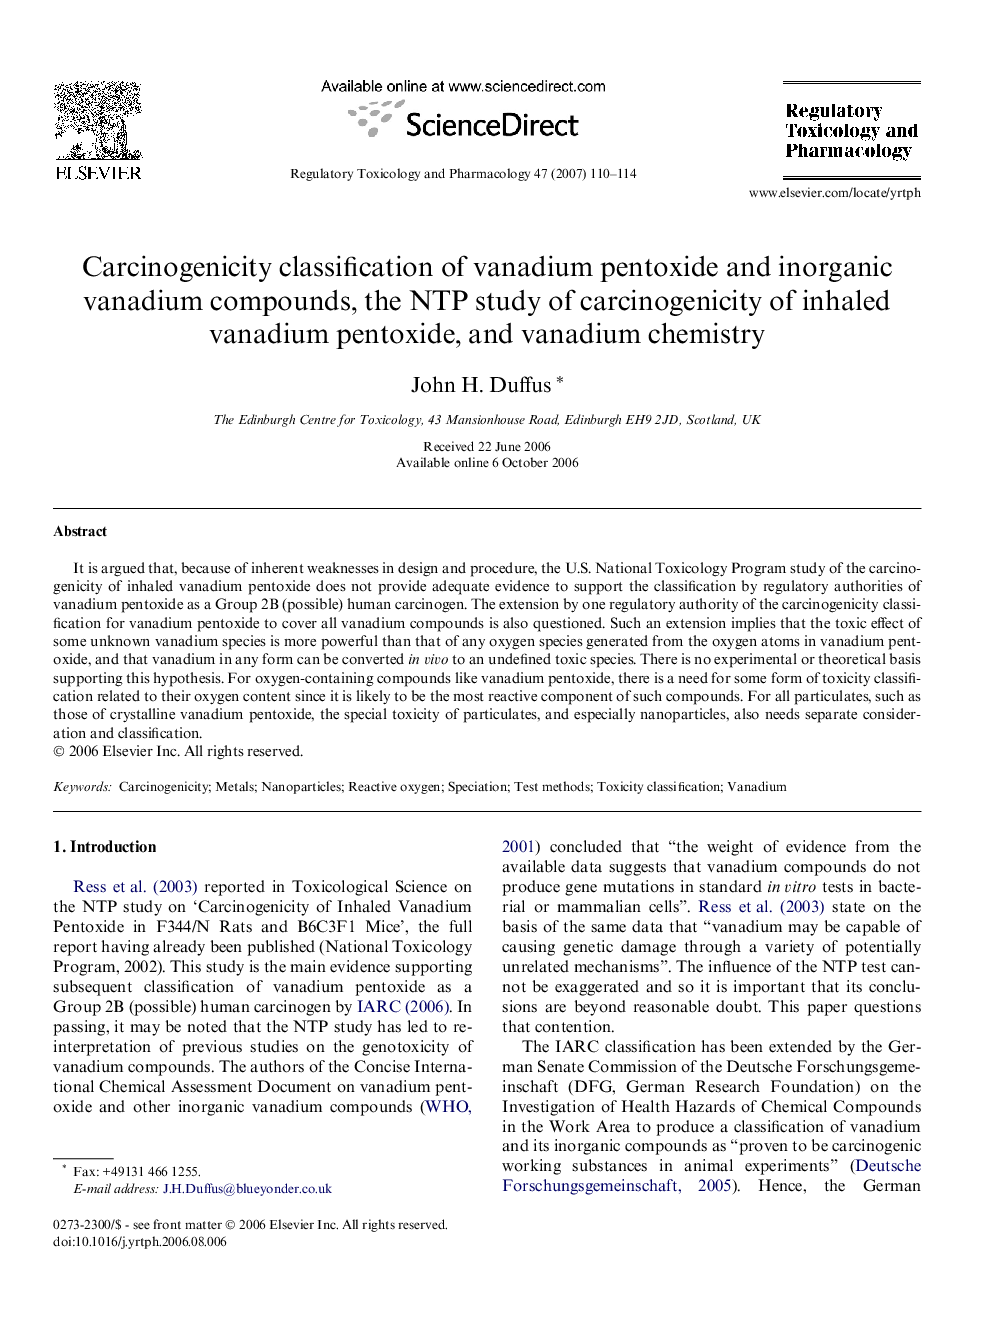 Carcinogenicity classification of vanadium pentoxide and inorganic vanadium compounds, the NTP study of carcinogenicity of inhaled vanadium pentoxide, and vanadium chemistry